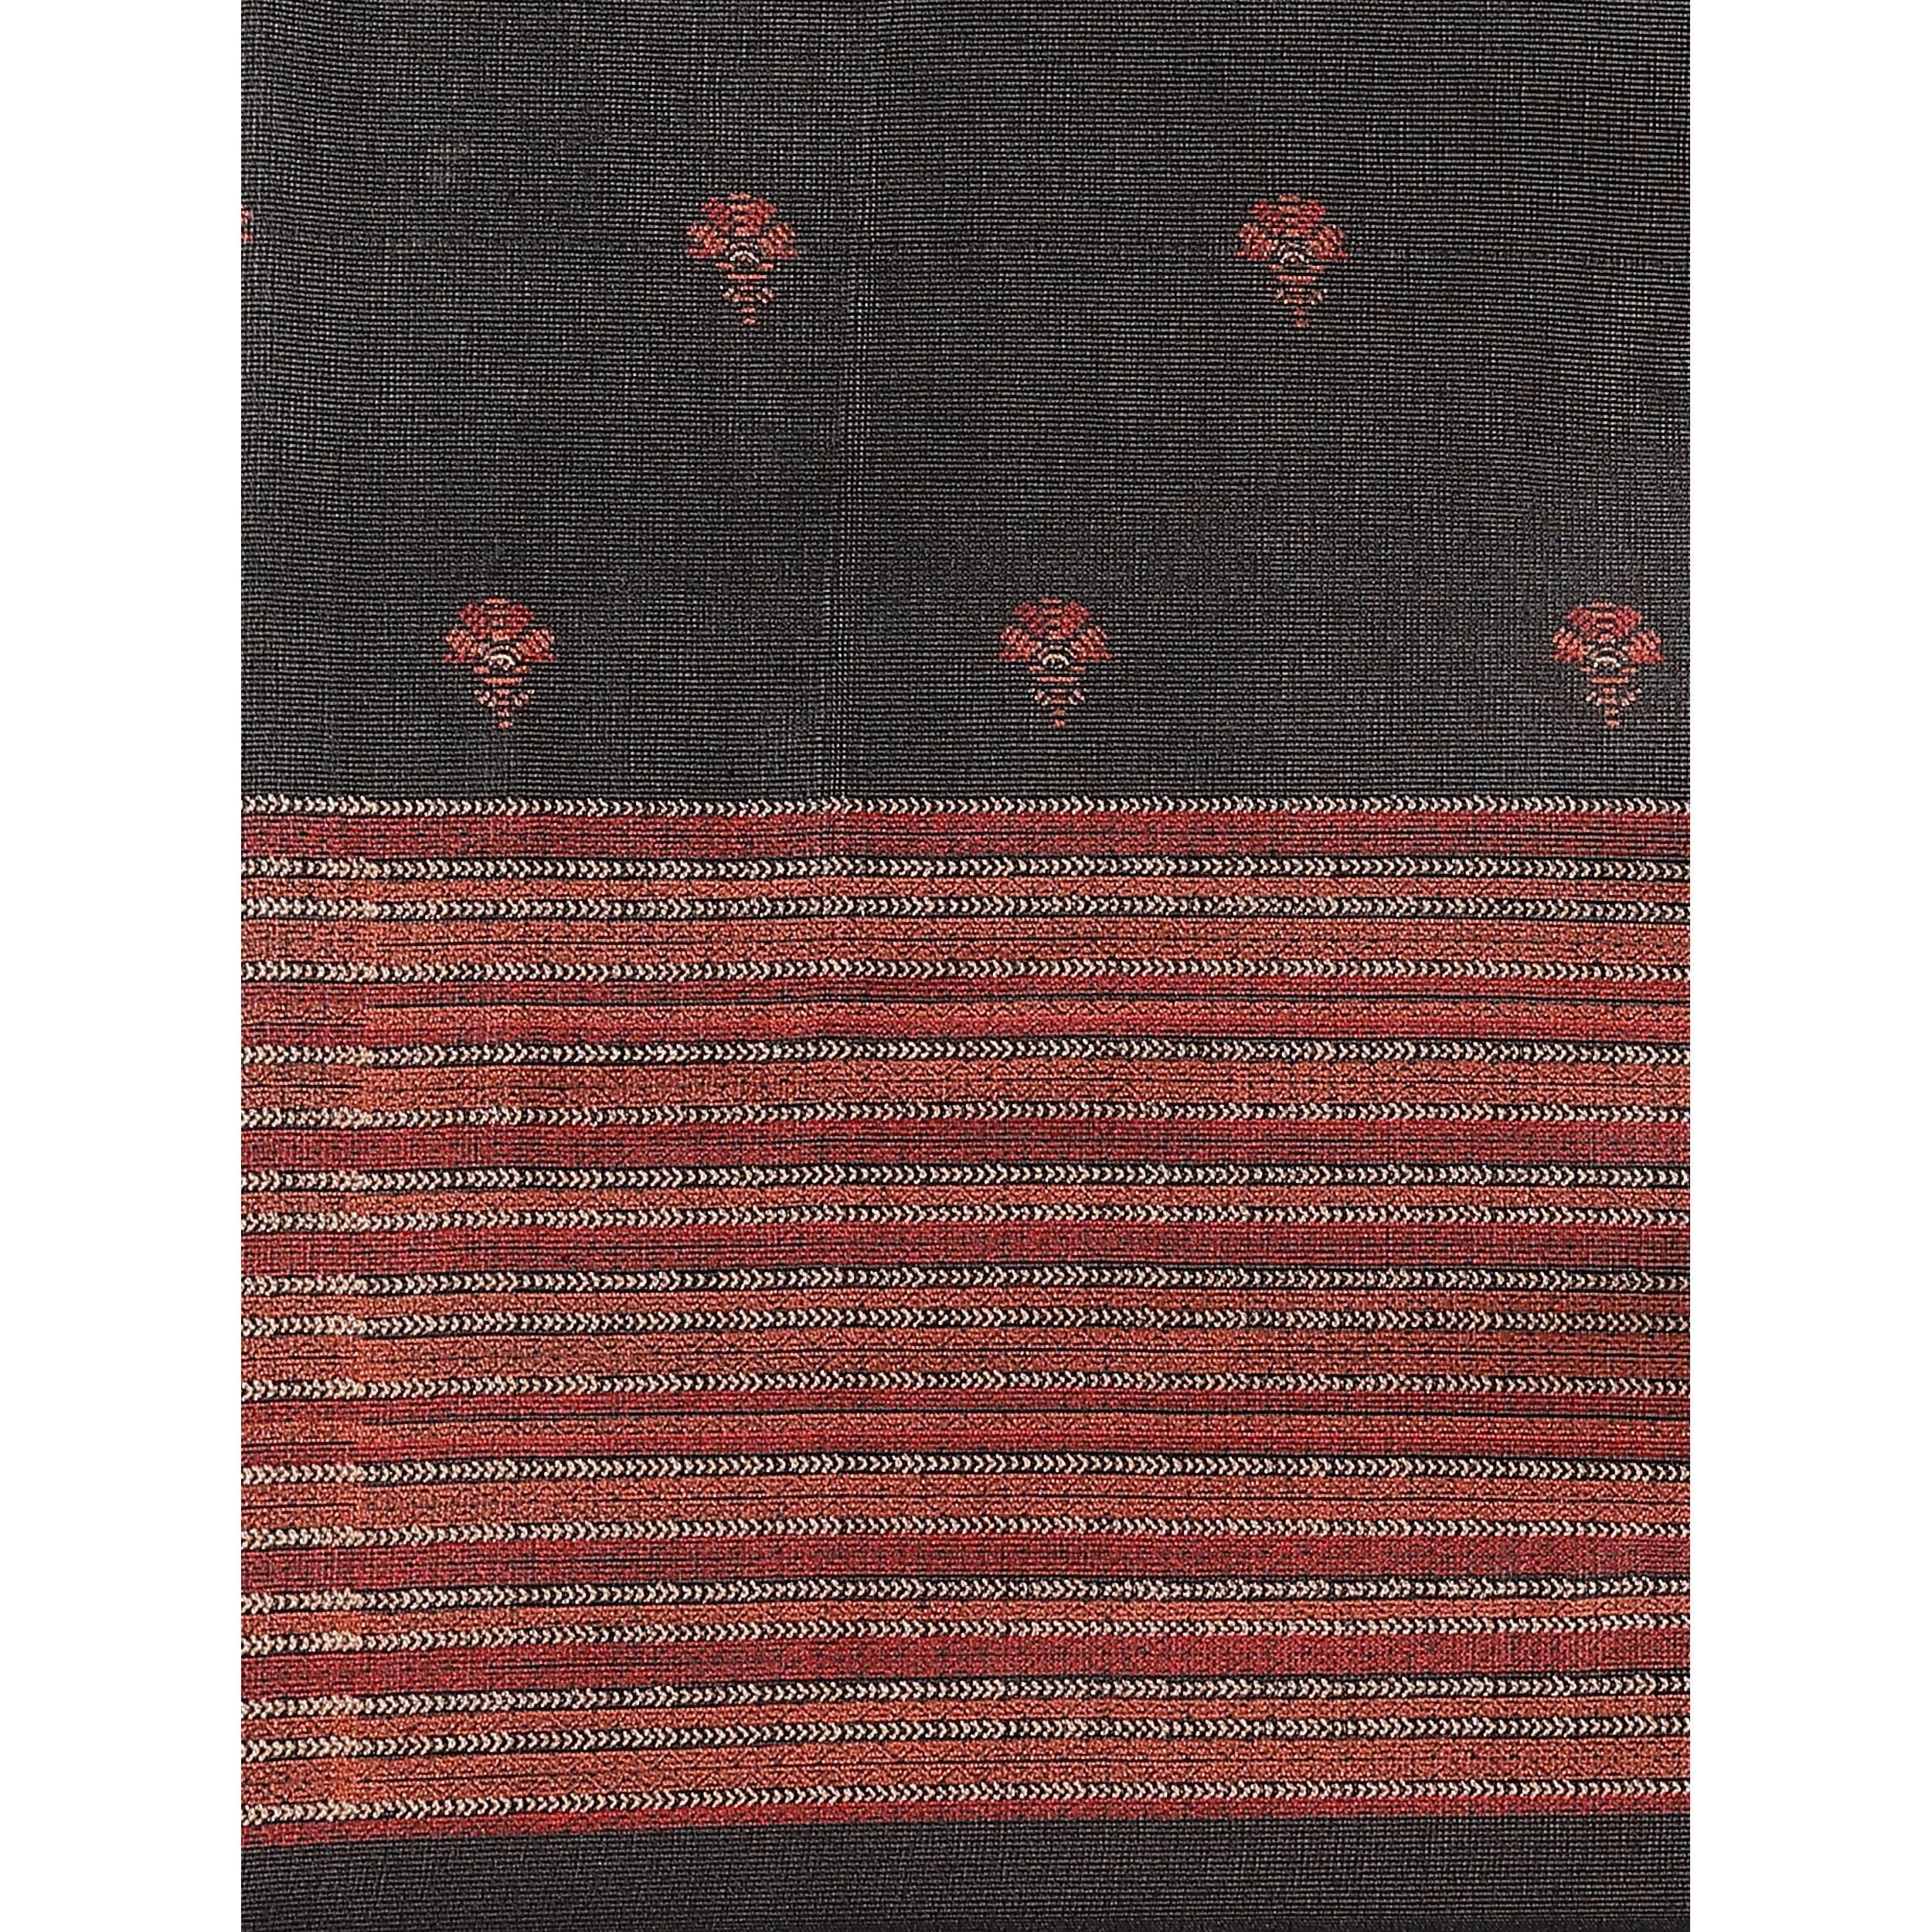 Majesty Black Colored Casual Wear Printed Jute Silk Saree - Peachmode